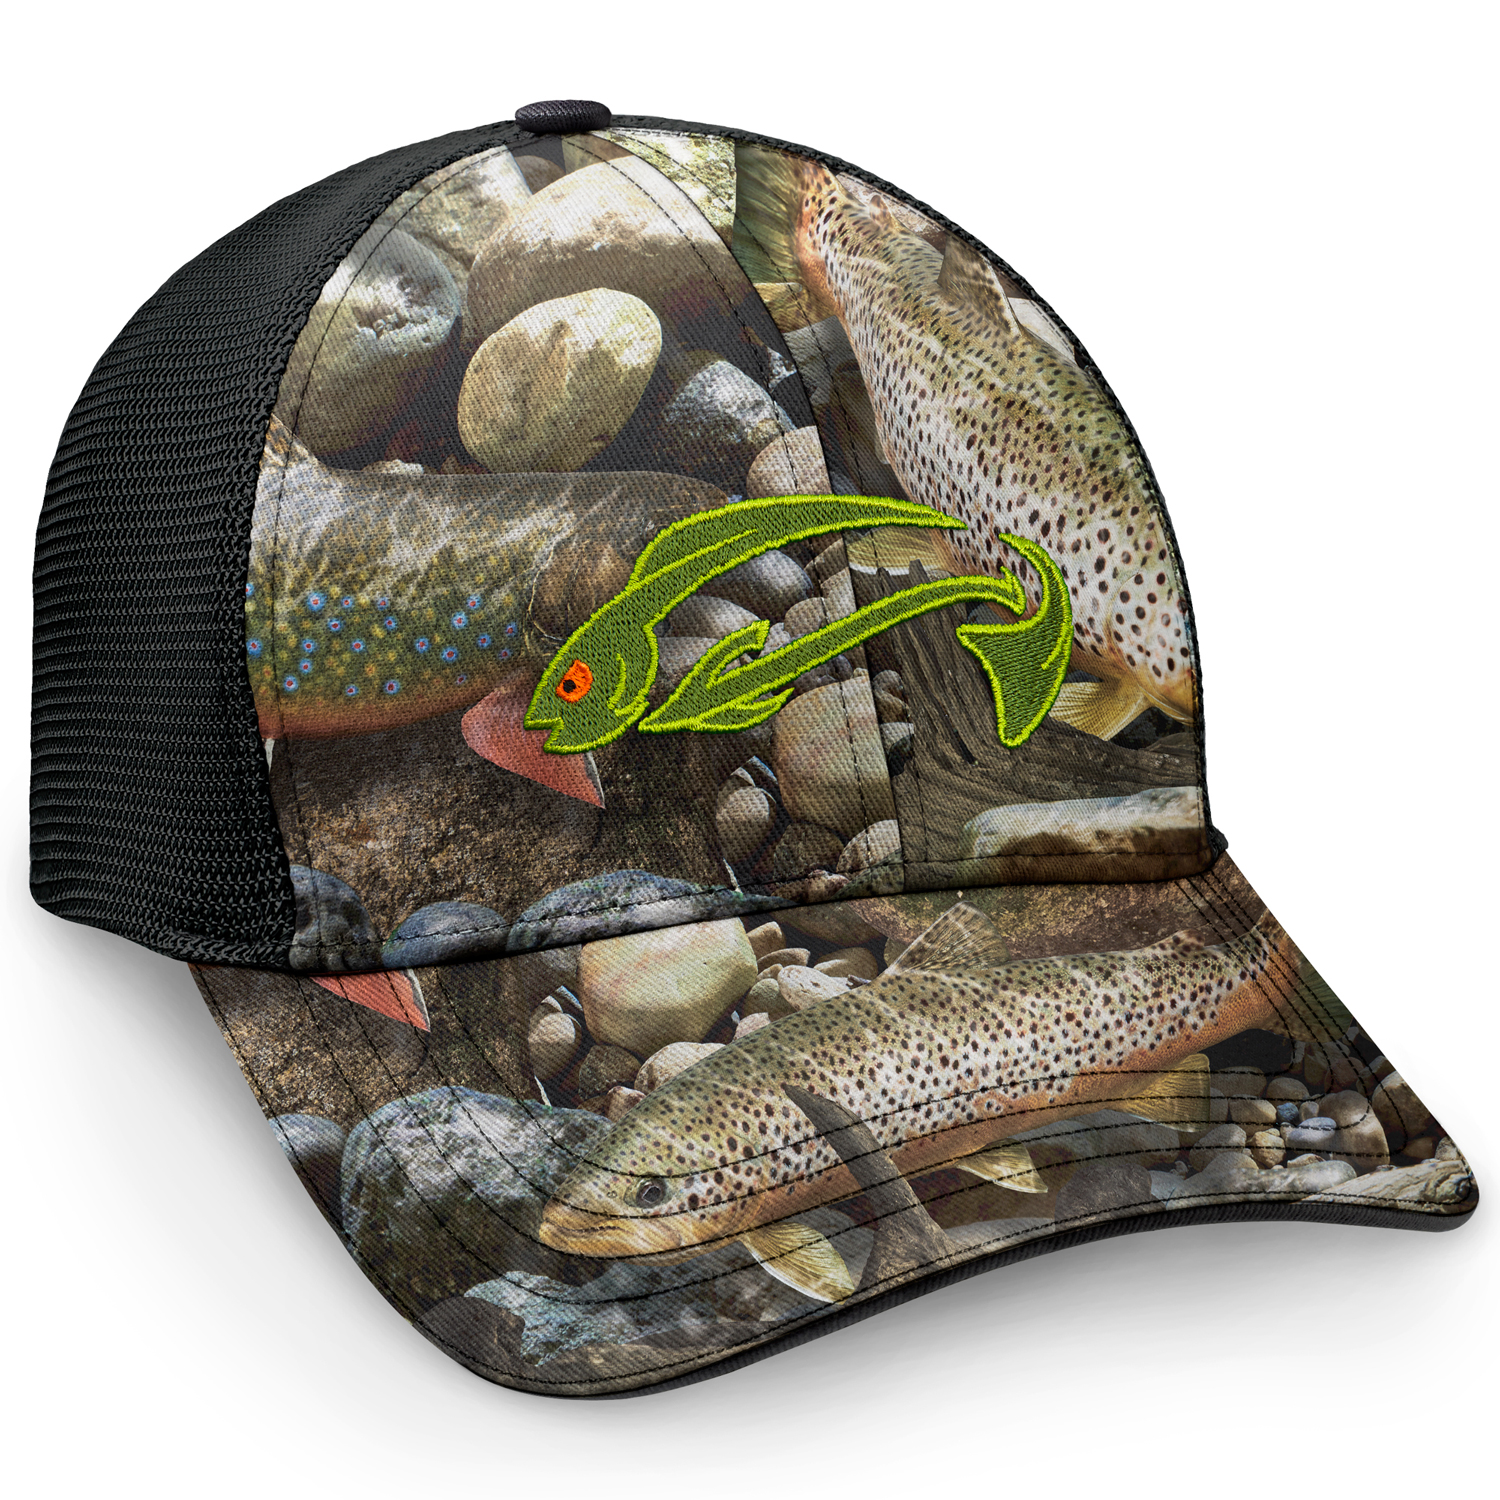 Trucker Style Fishing Hats, Mesh Back Trout Fishing Cap